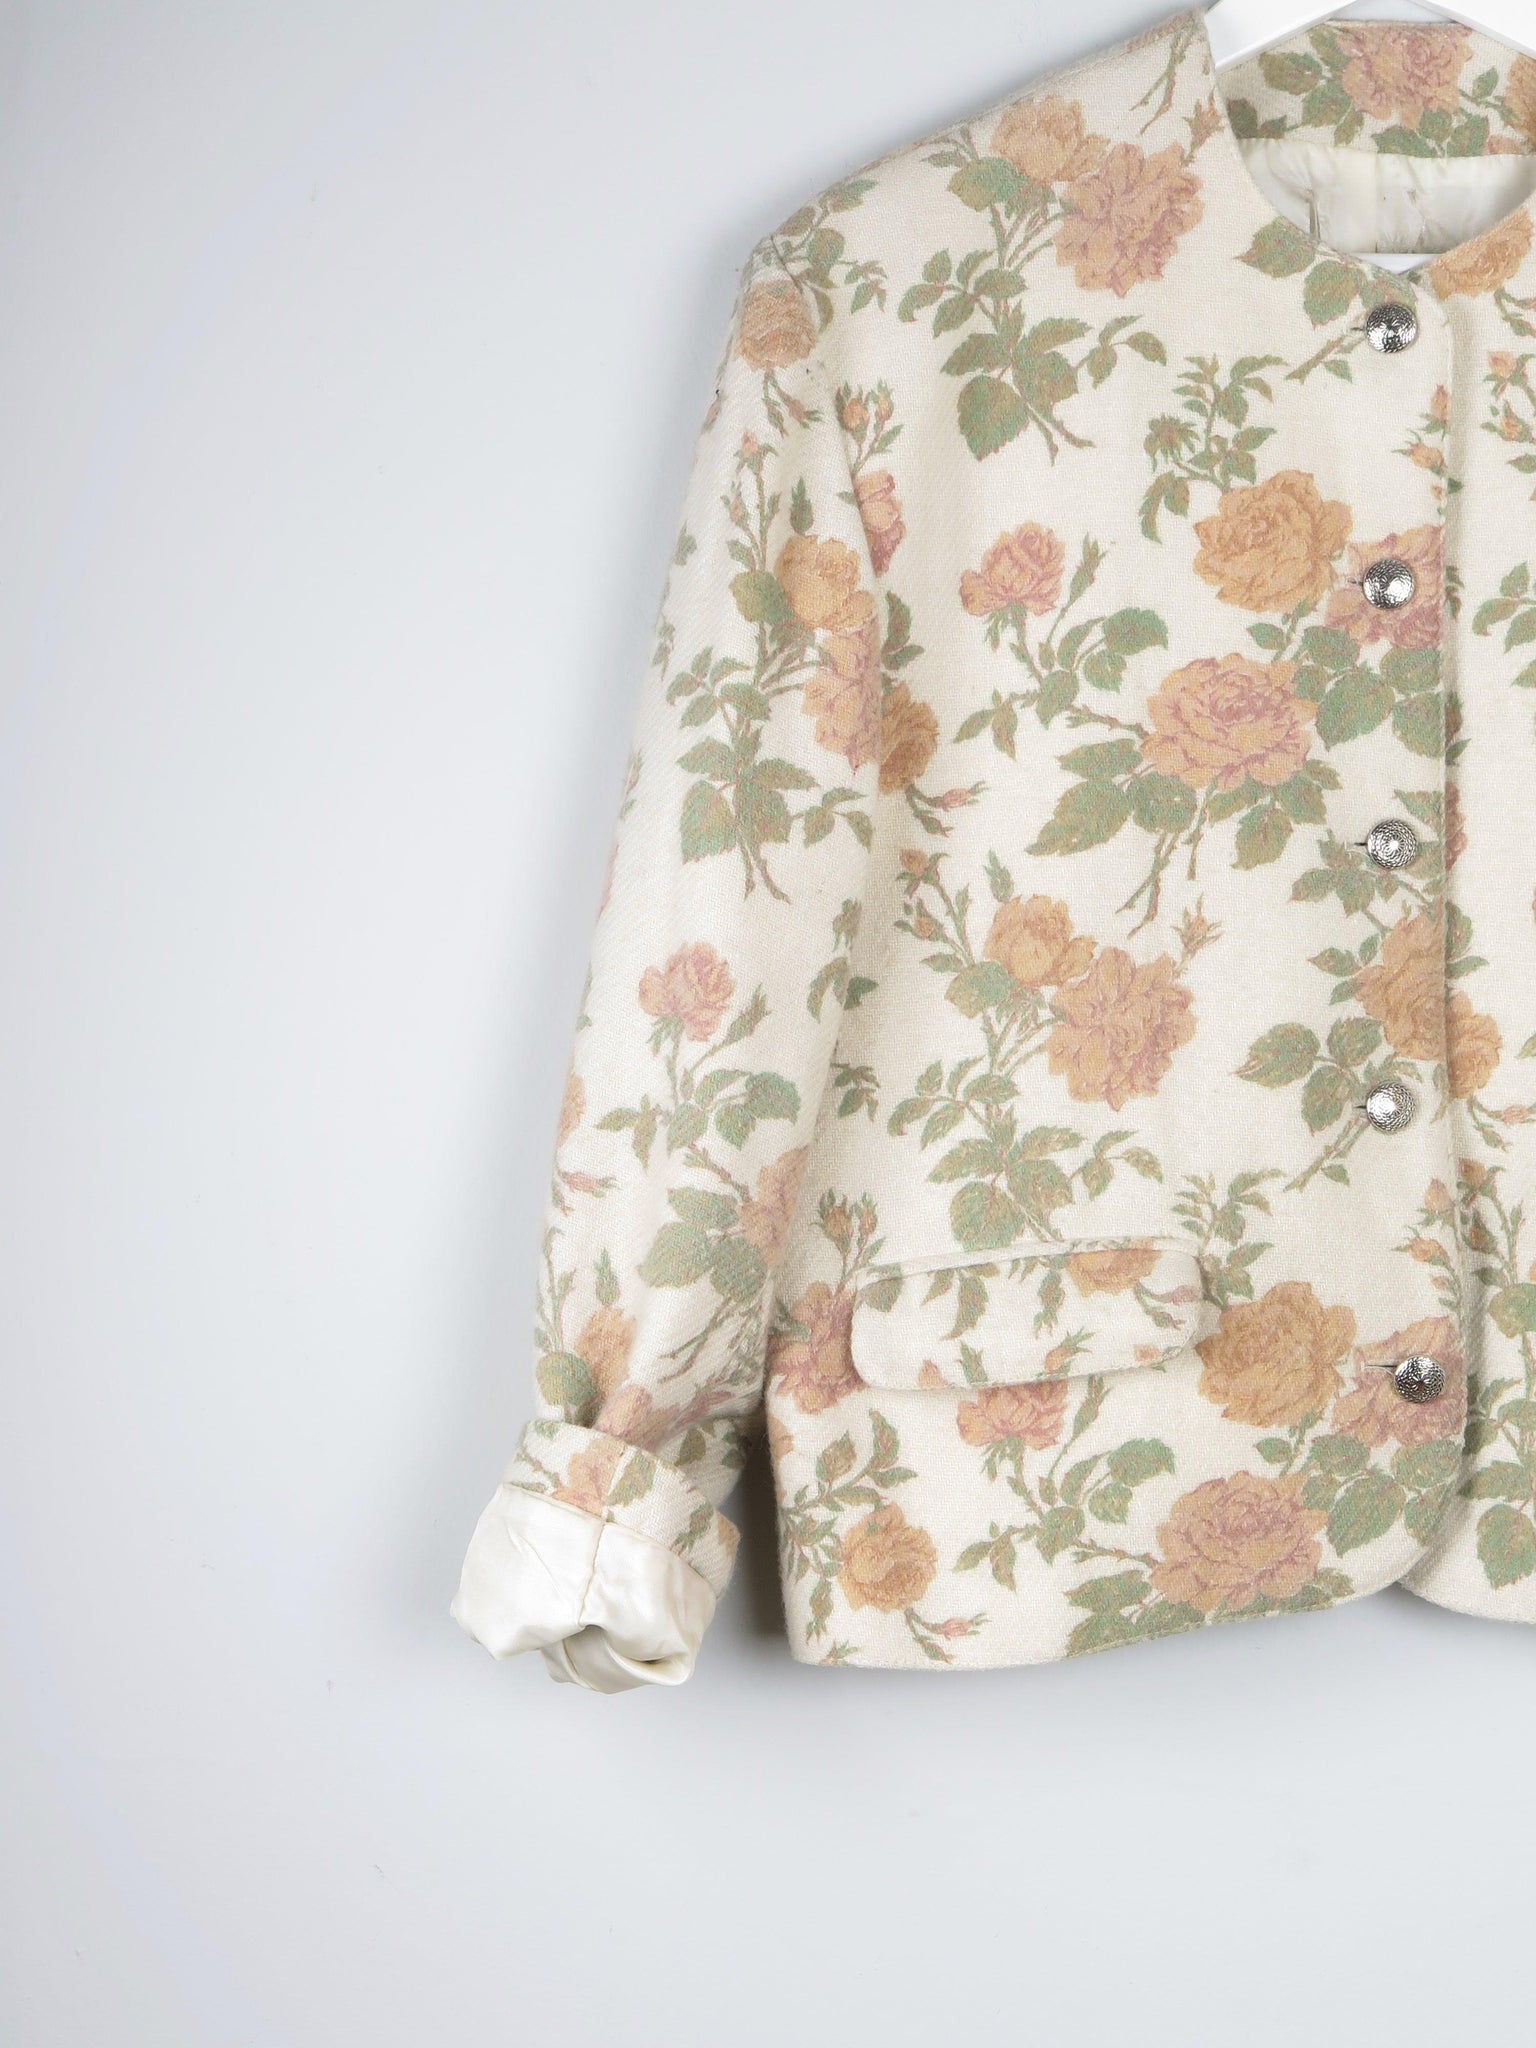 Women’s Vintage Floral Printed Wool 80s Jacket L - The Harlequin